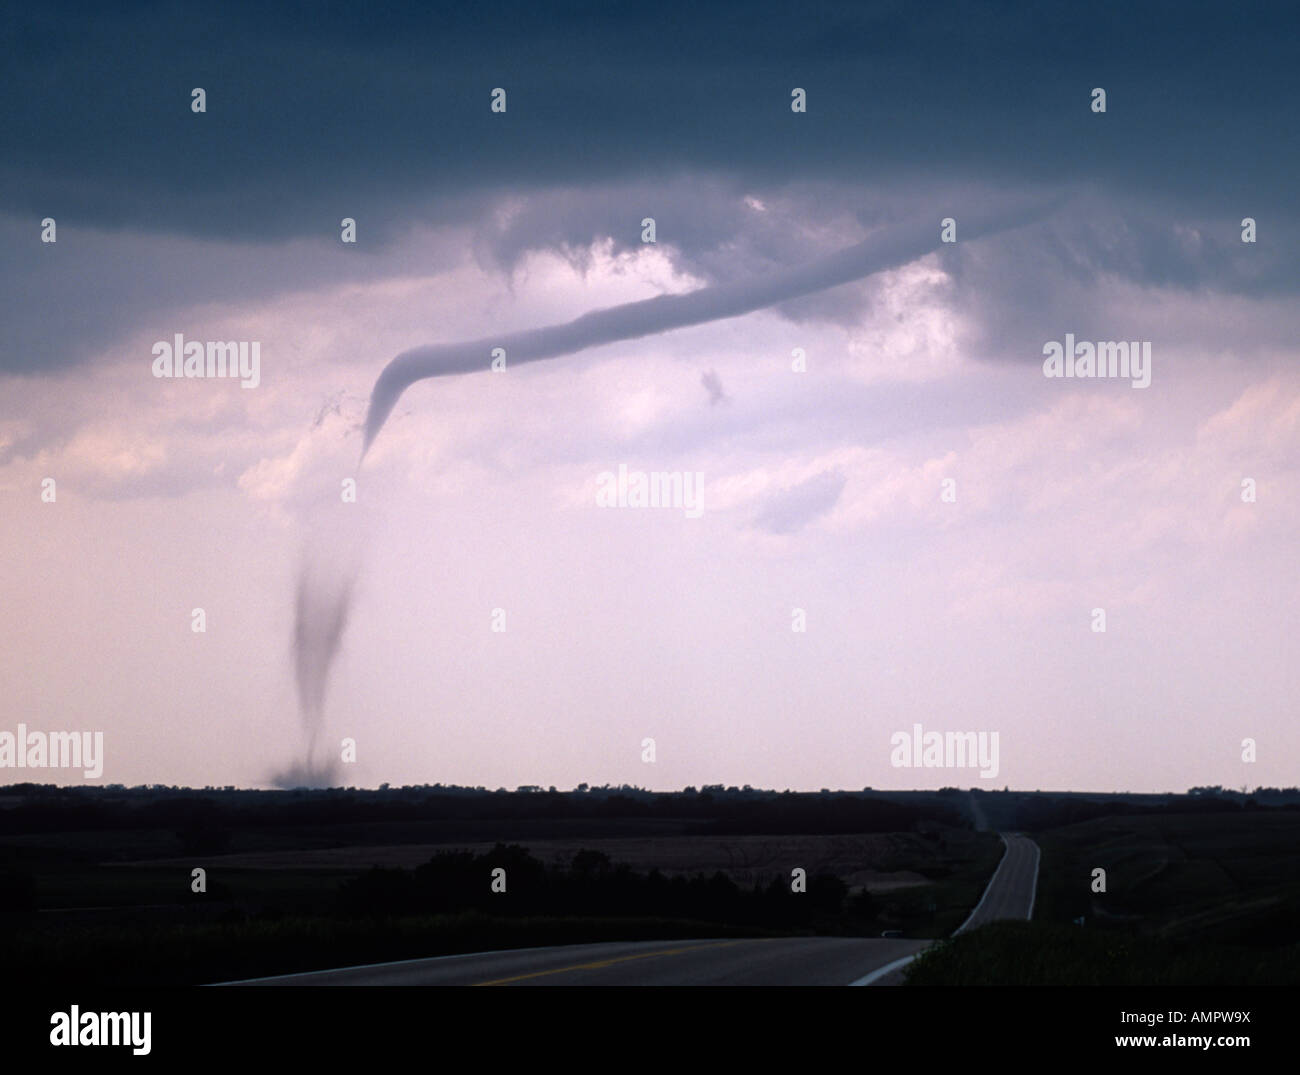 An odd shaped tornado touches down during a tornado outbreak in Nebraska, USA Stock Photo